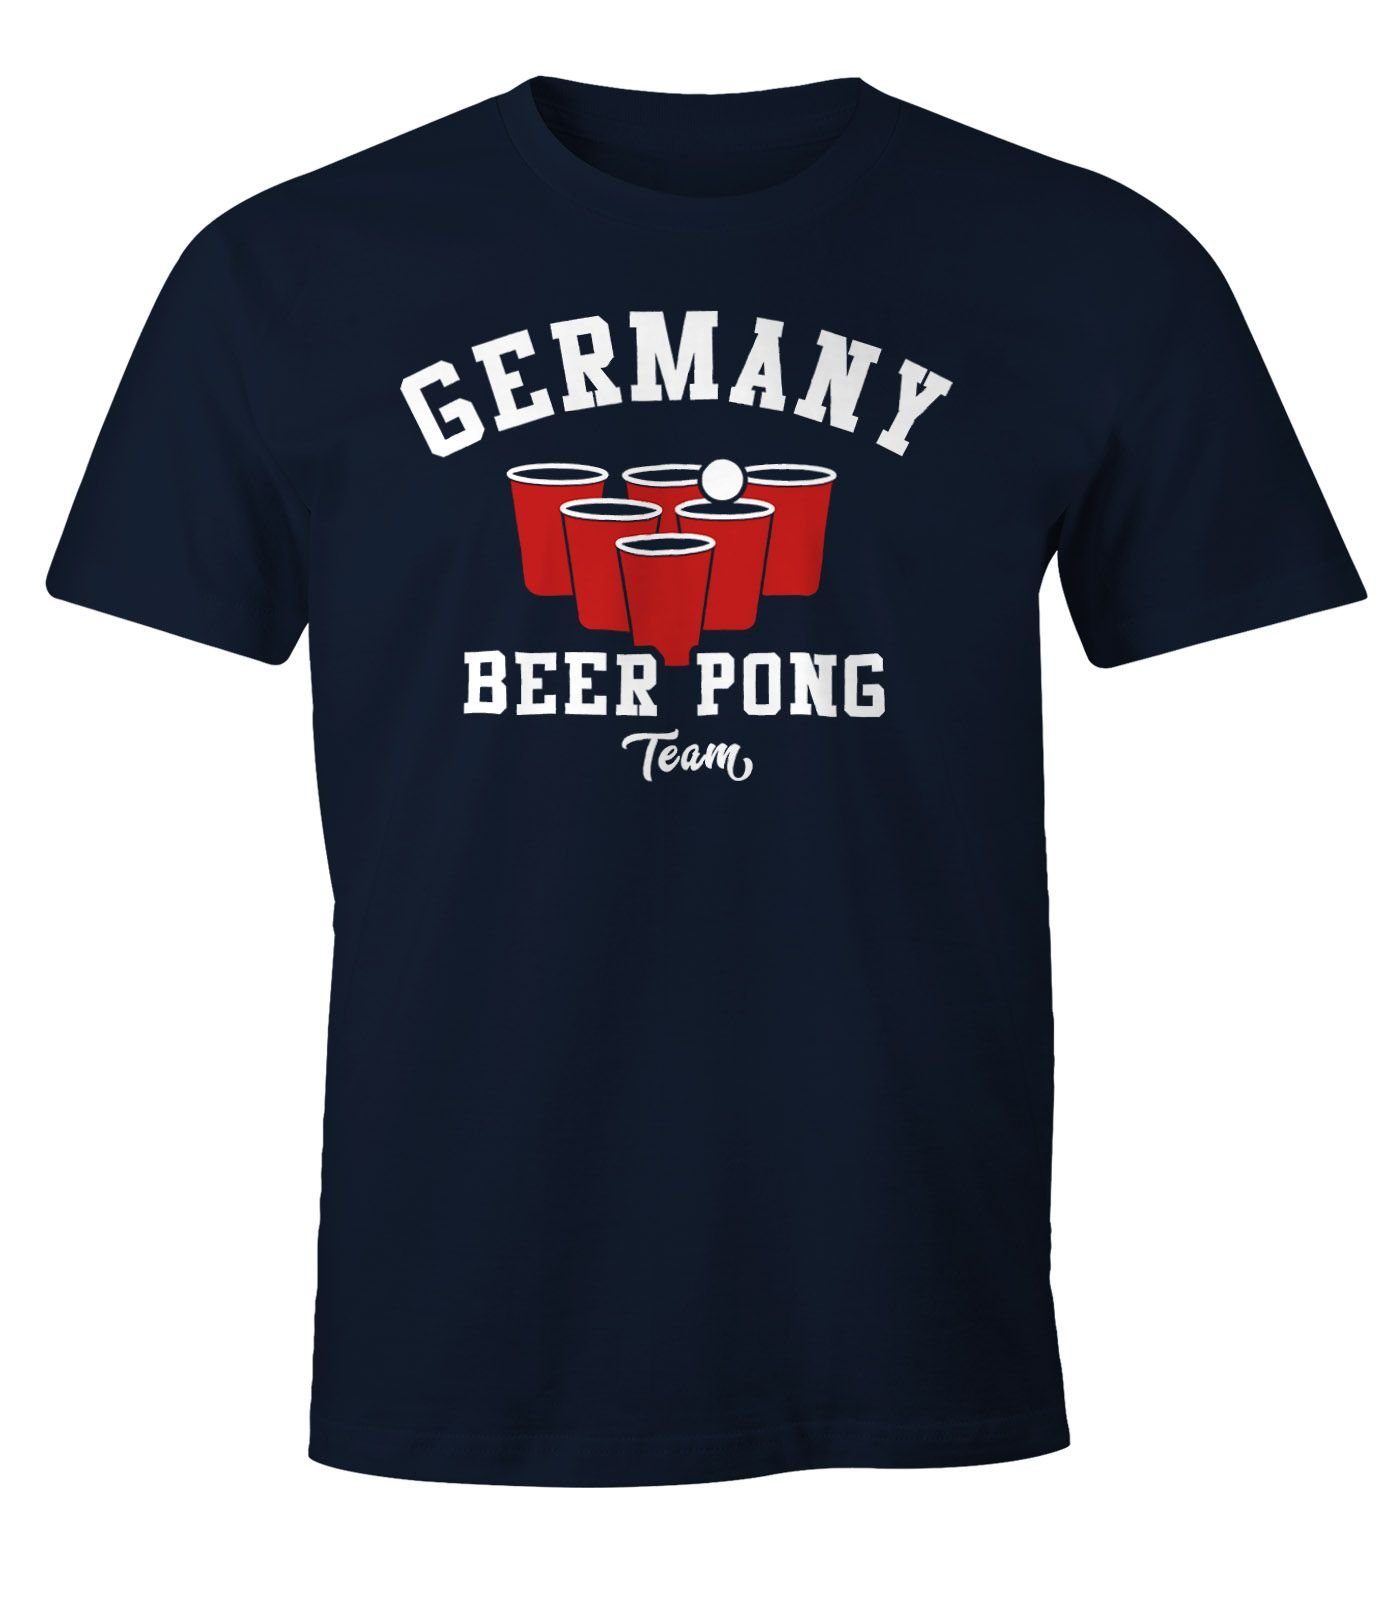 MoonWorks Print-Shirt Herren T-Shirt Germany Beer Pong Team Bier Fun-Shirt Moonworks® mit Print navy